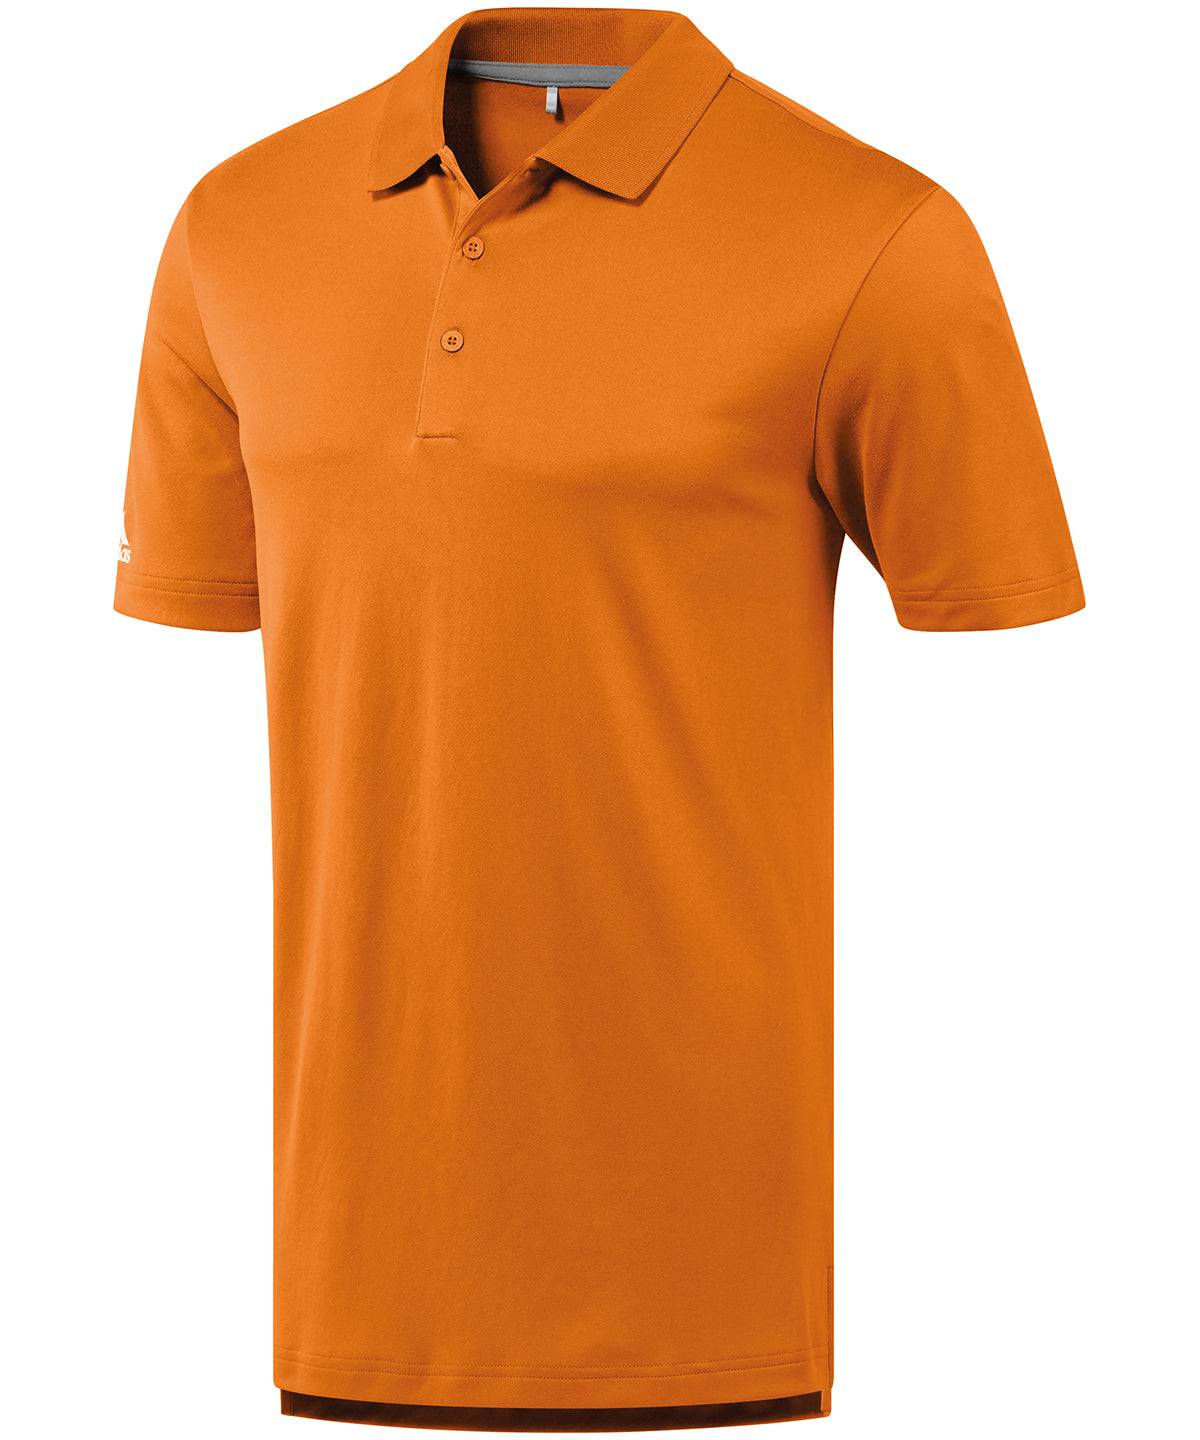 Bright Orange - Performance polo shirt